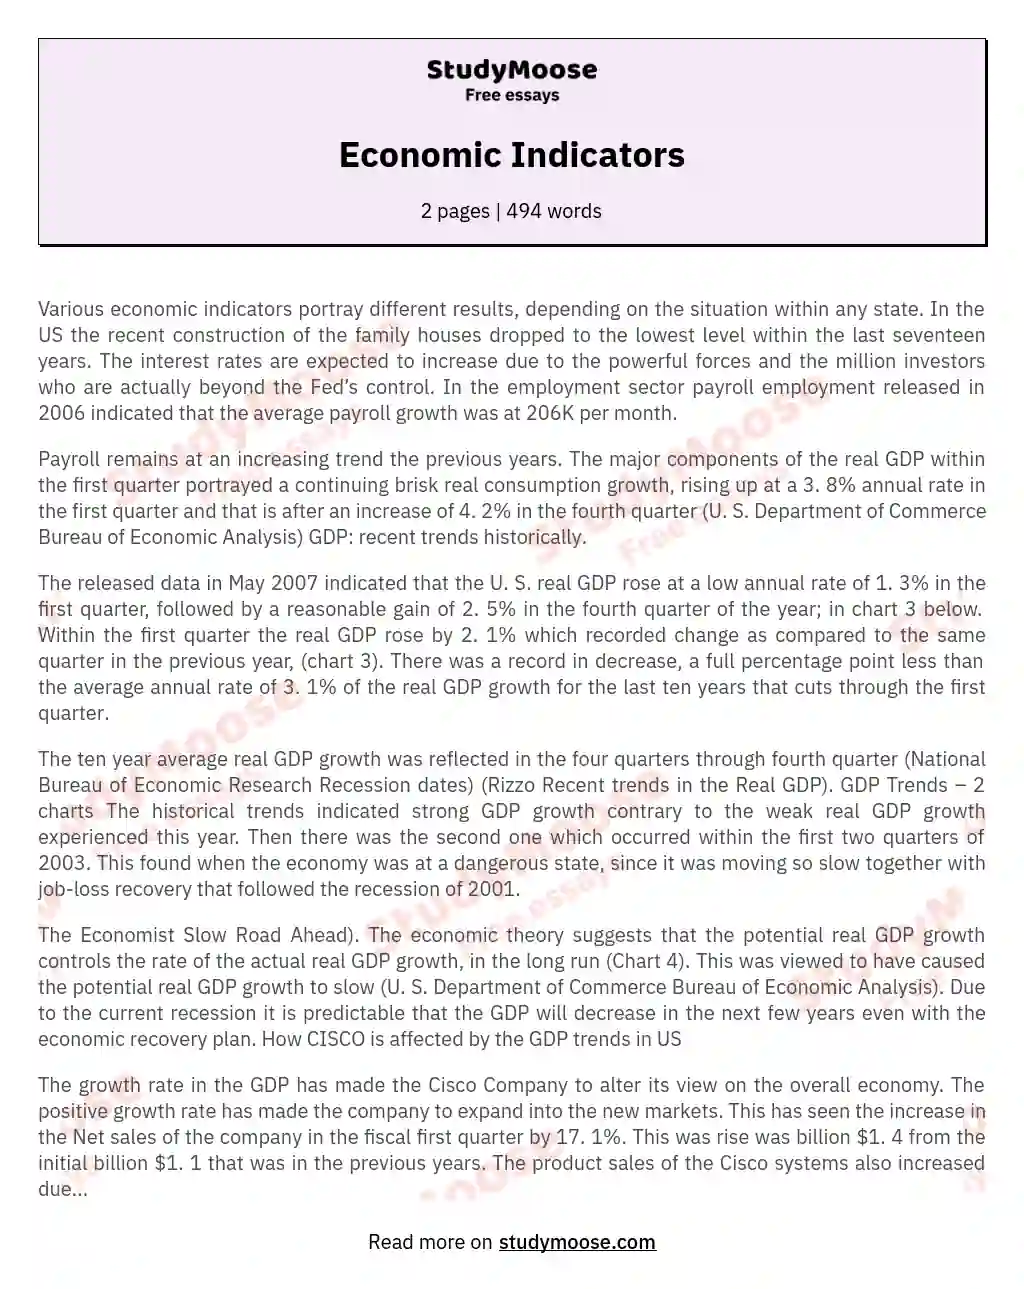 essay of economic indicators